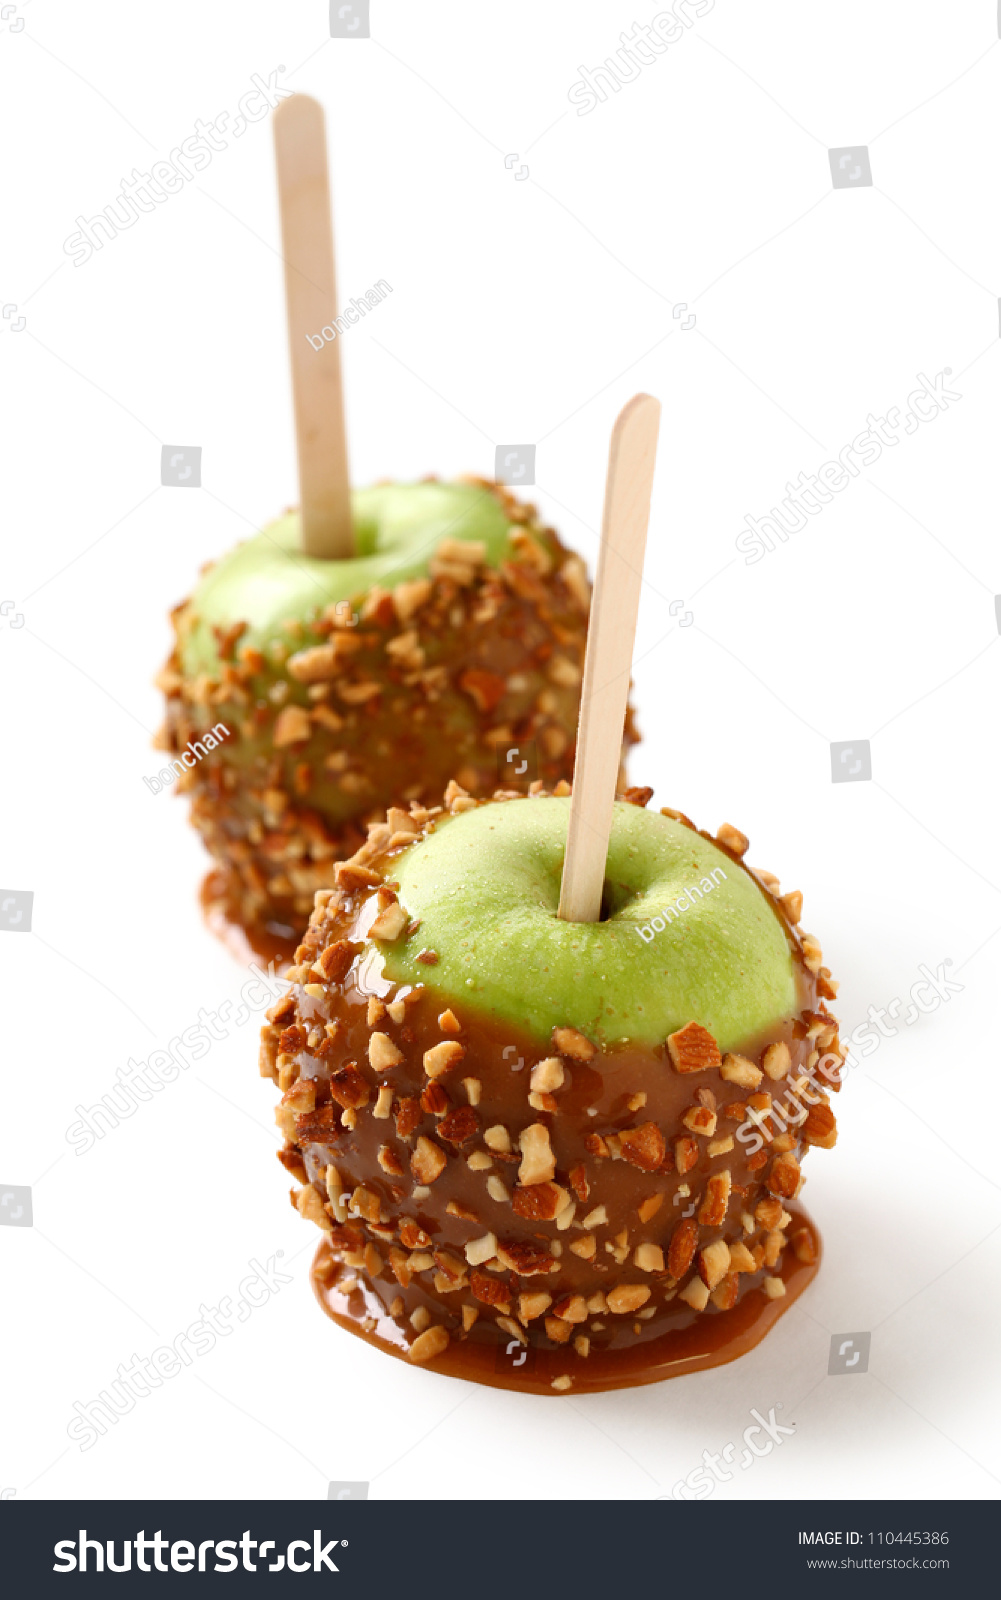 caramel apple clipart images - photo #29